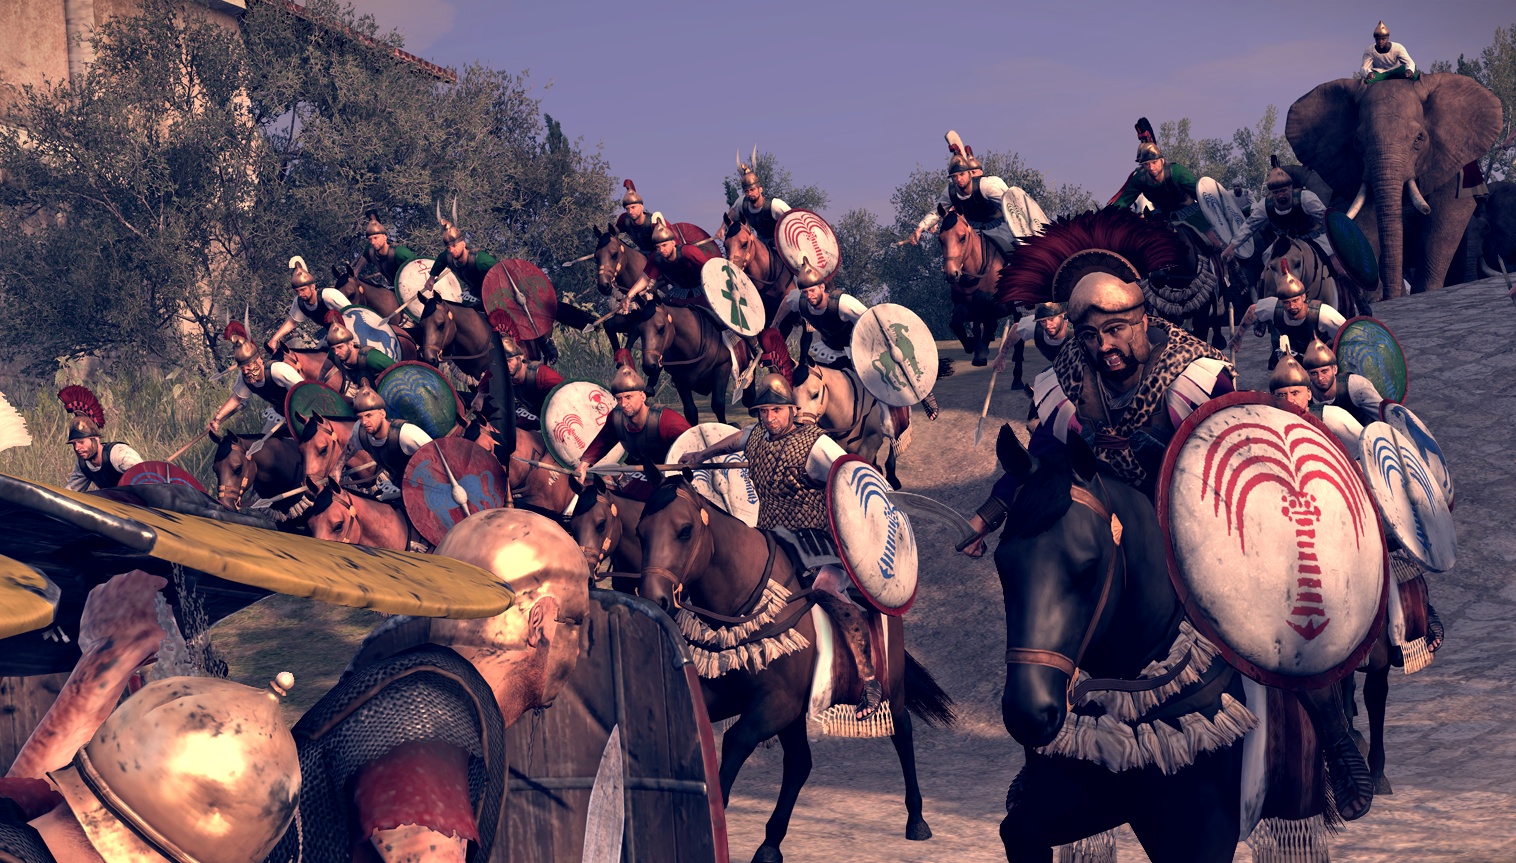 Total-War-Rome-II-Gets-Free-Seasons-Wonders-Update-Alongside-New-Hannibal-Campaign-434498-2.jpg